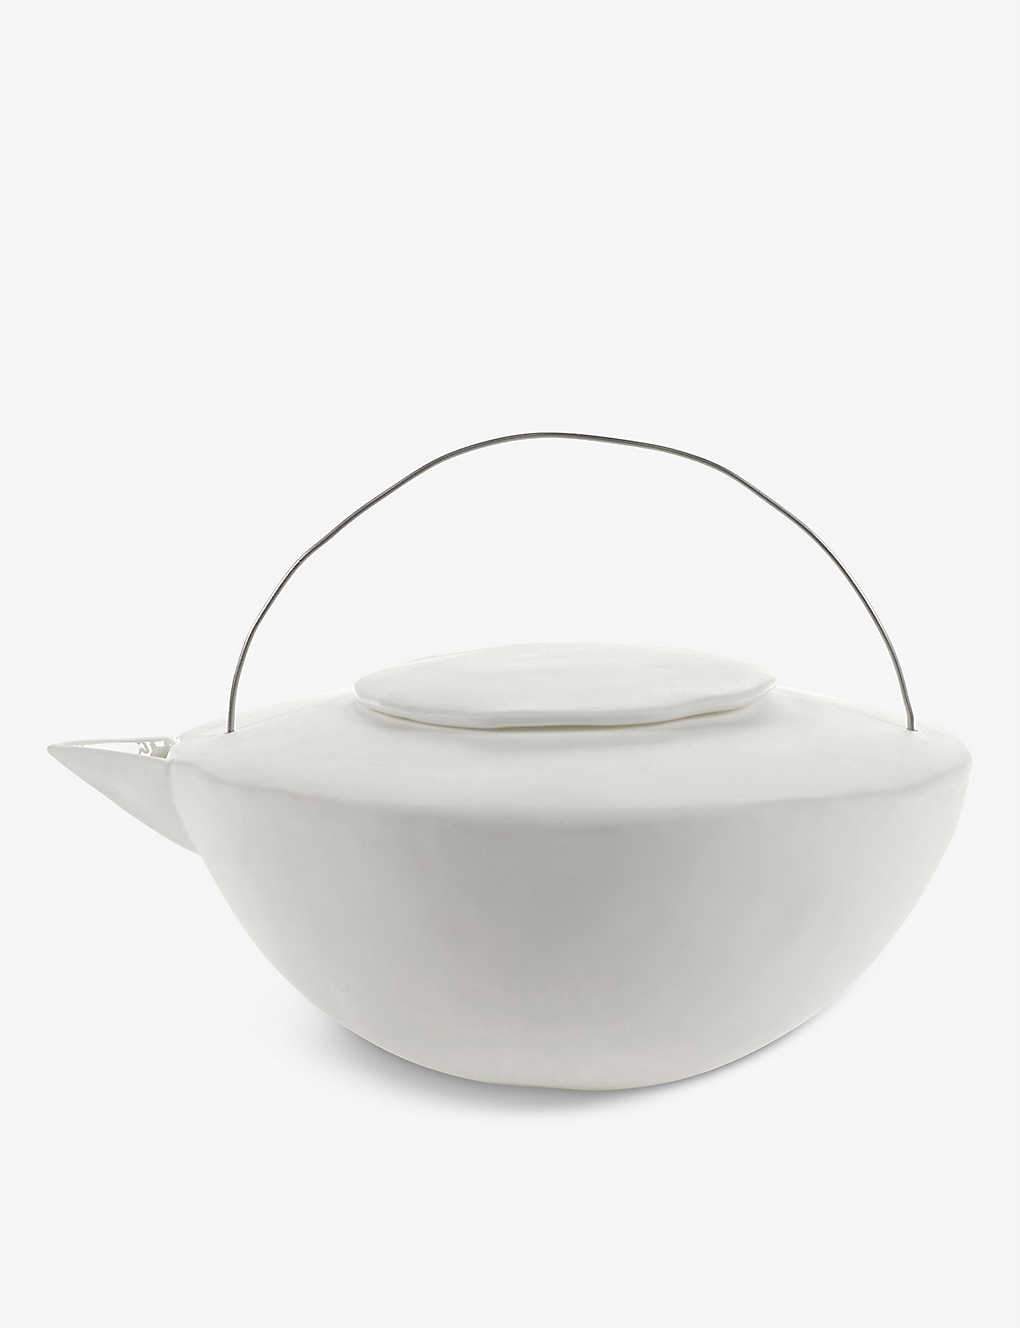 Serax Roos Vandevelde Perfect Imperfection Sabi China Teapot